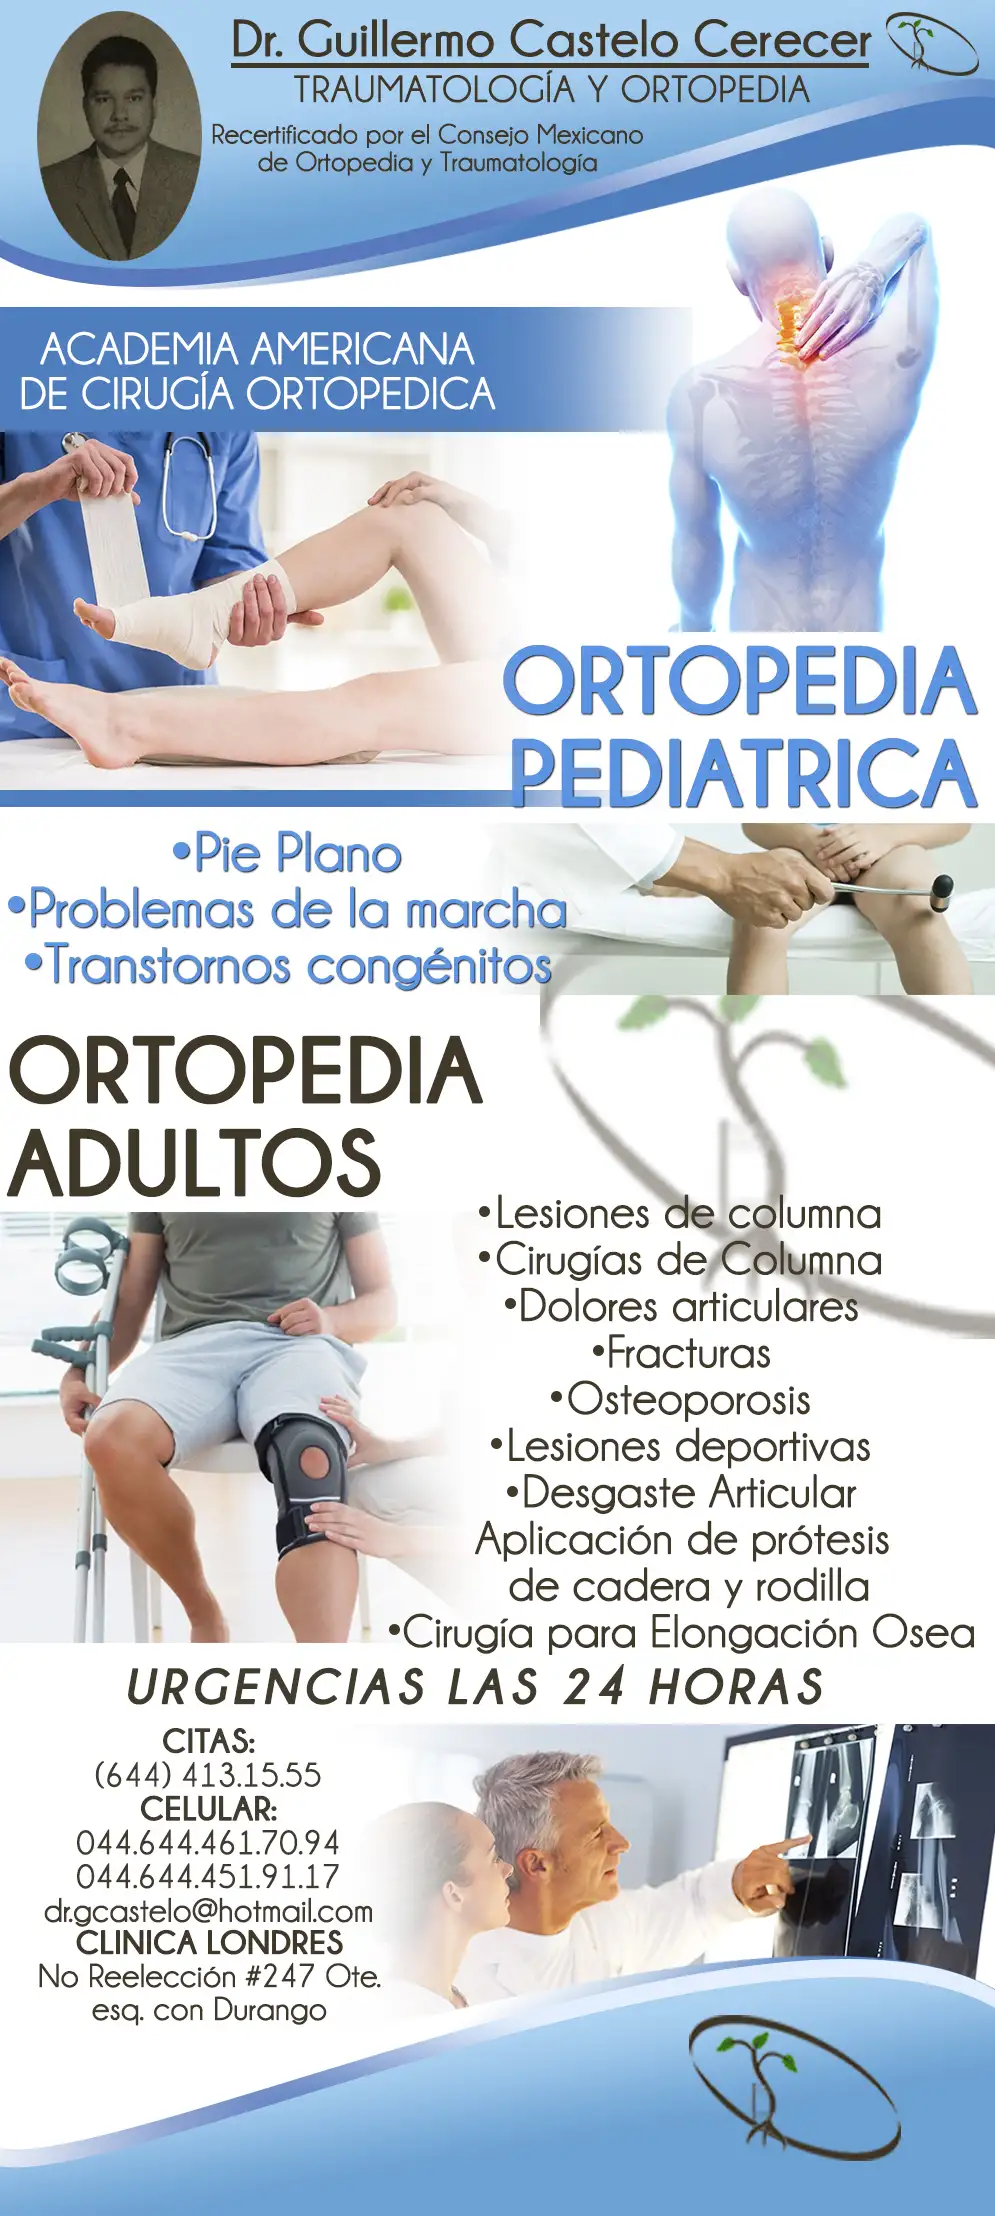 Dr. Guillermo Castelo Cerecer Traumatologia y Ortopedia